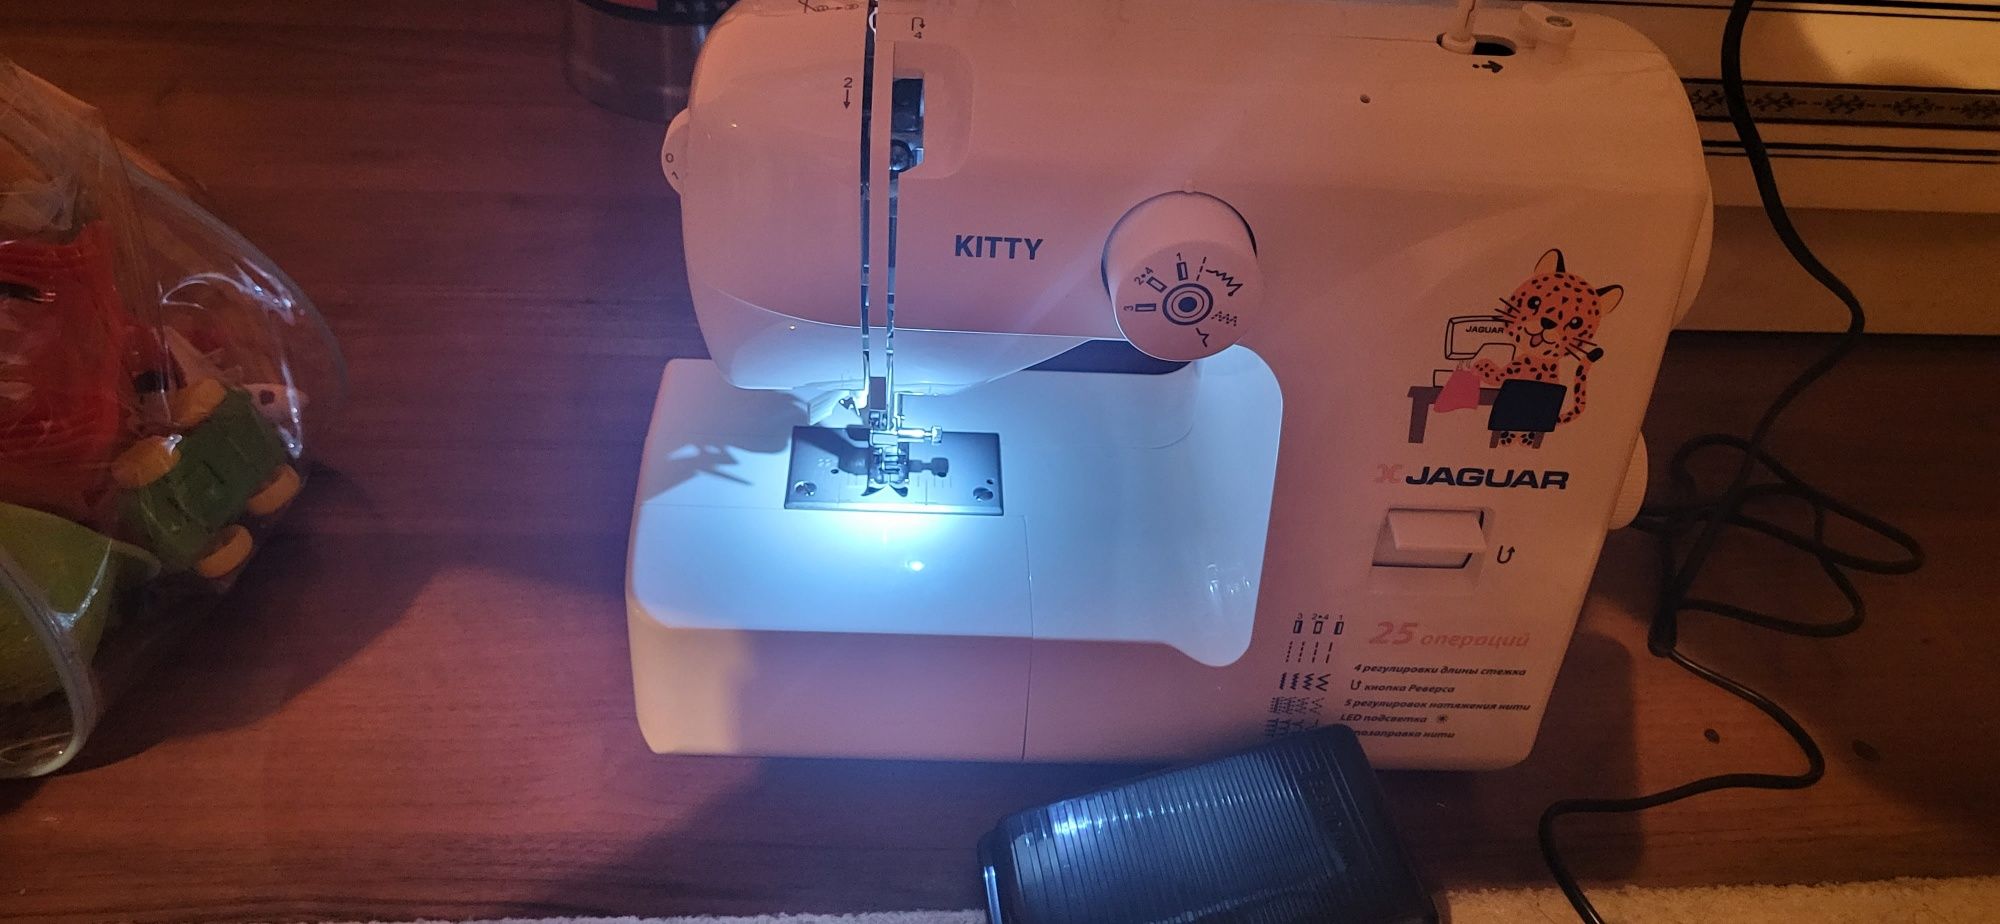 Швейная машина kitty